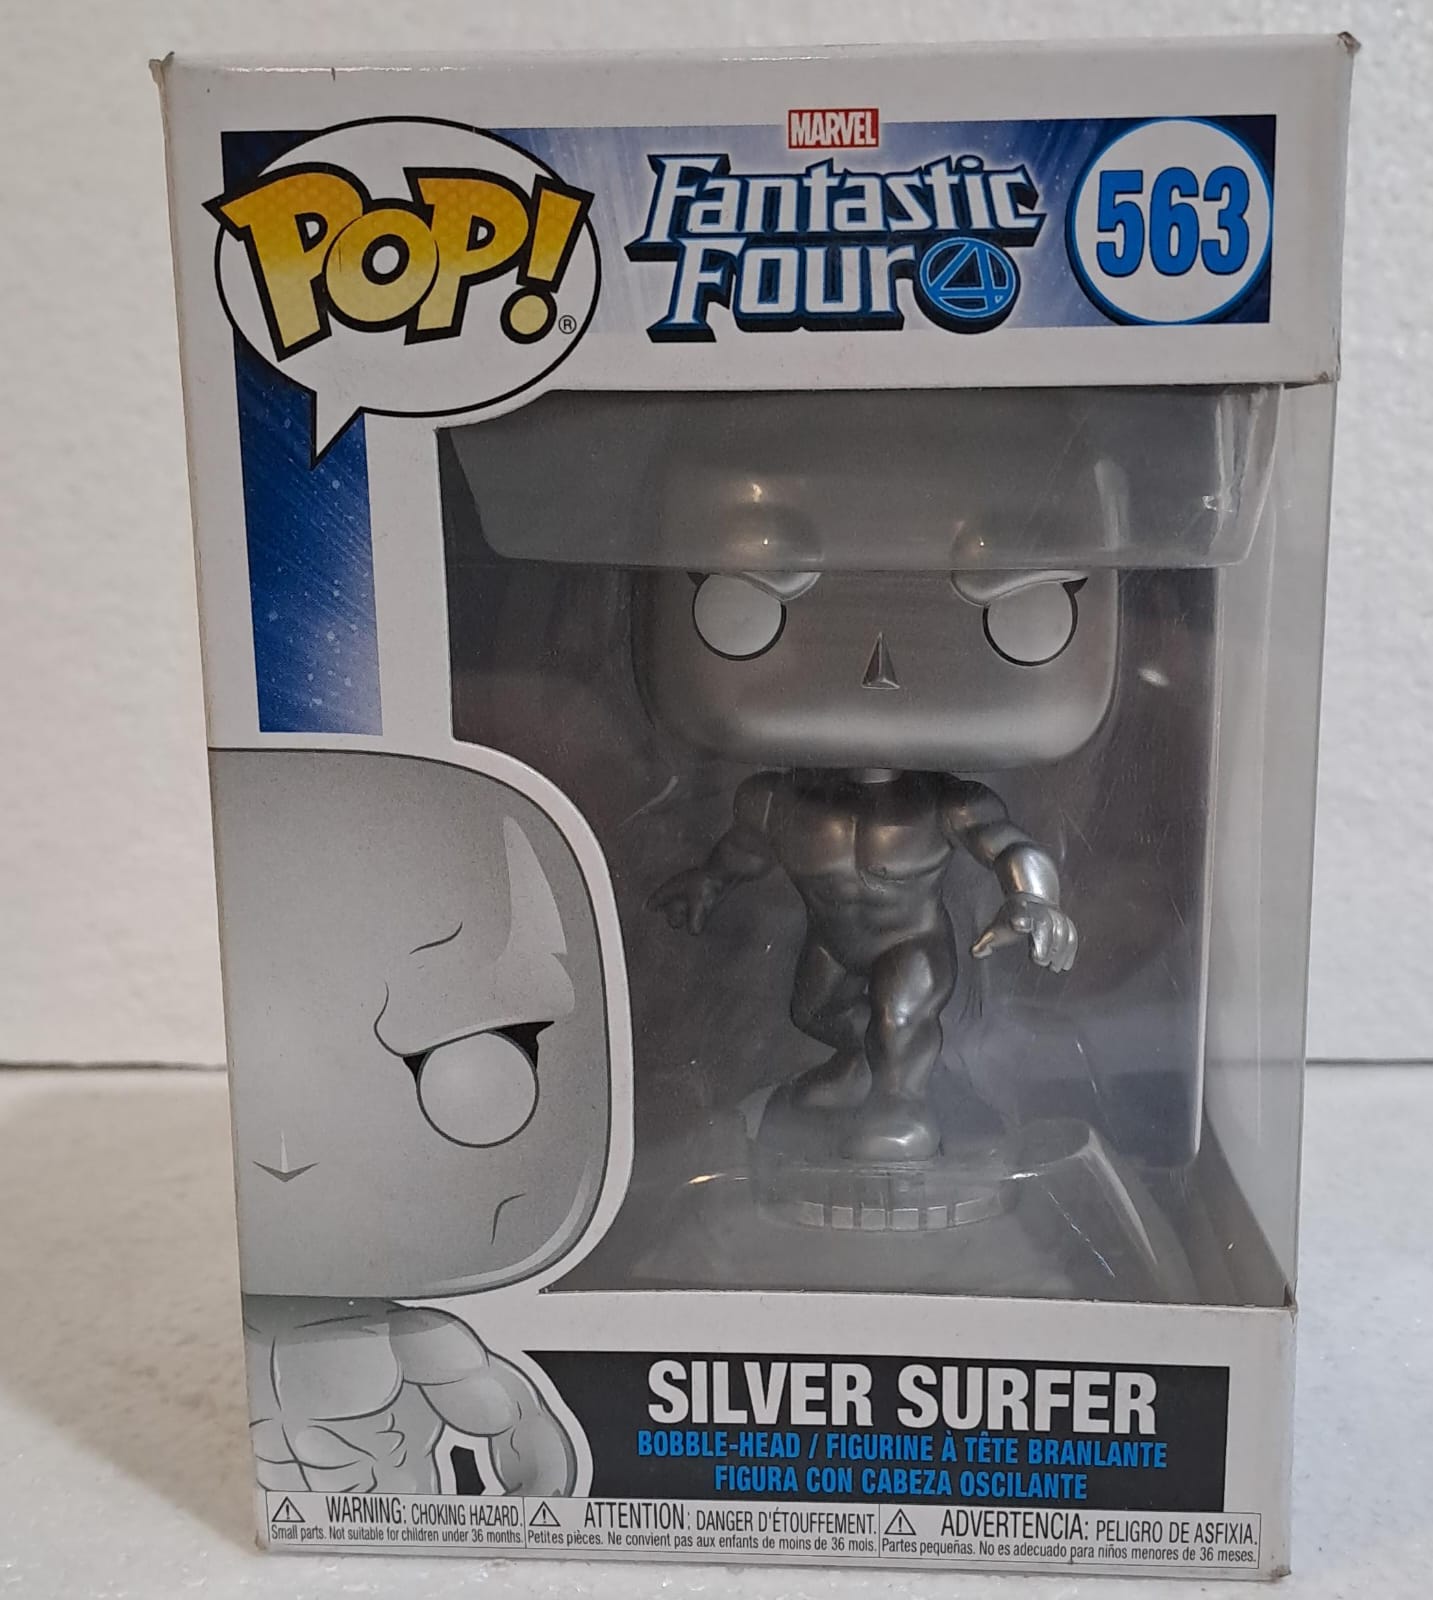 Fantastic Four 4 Funko Pop 563 Silver Surfer [Openbox]